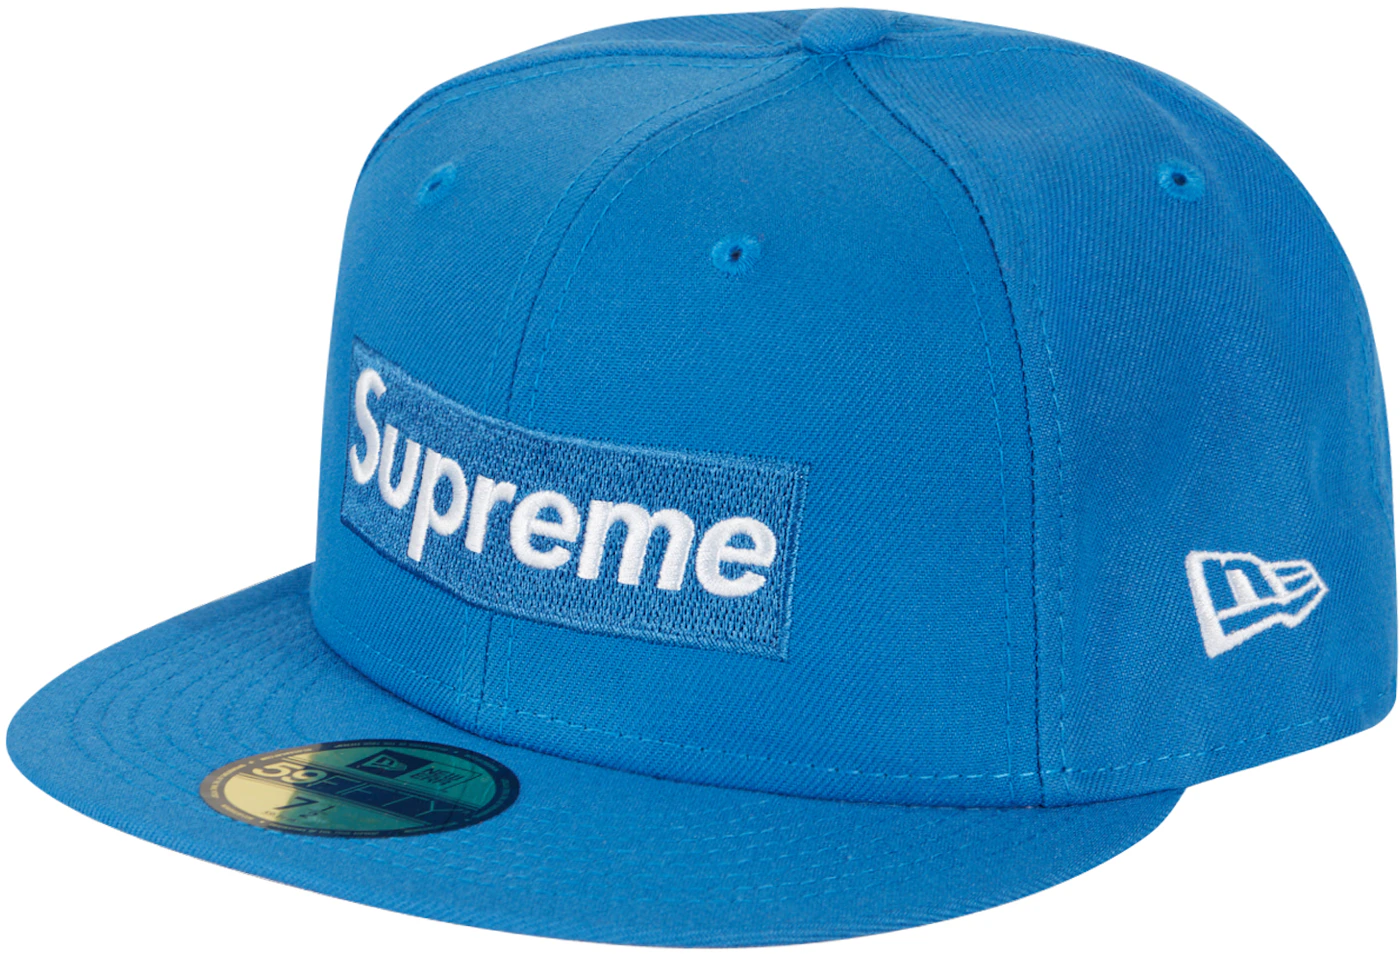 Supreme x New Era Champions Box Logo Hat 'Bright Blue